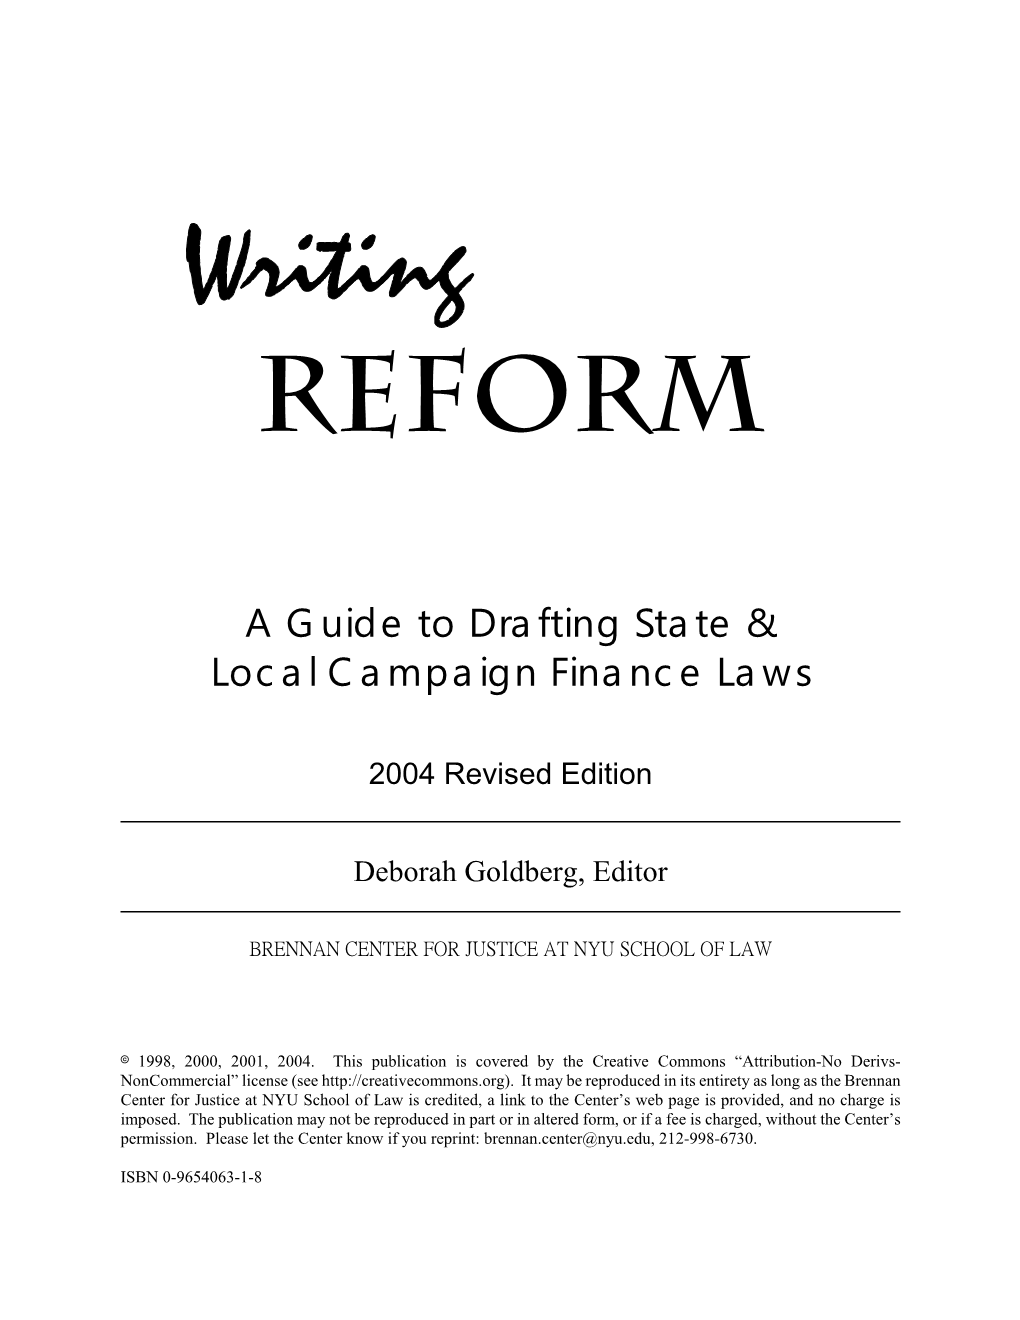 Writing Reform